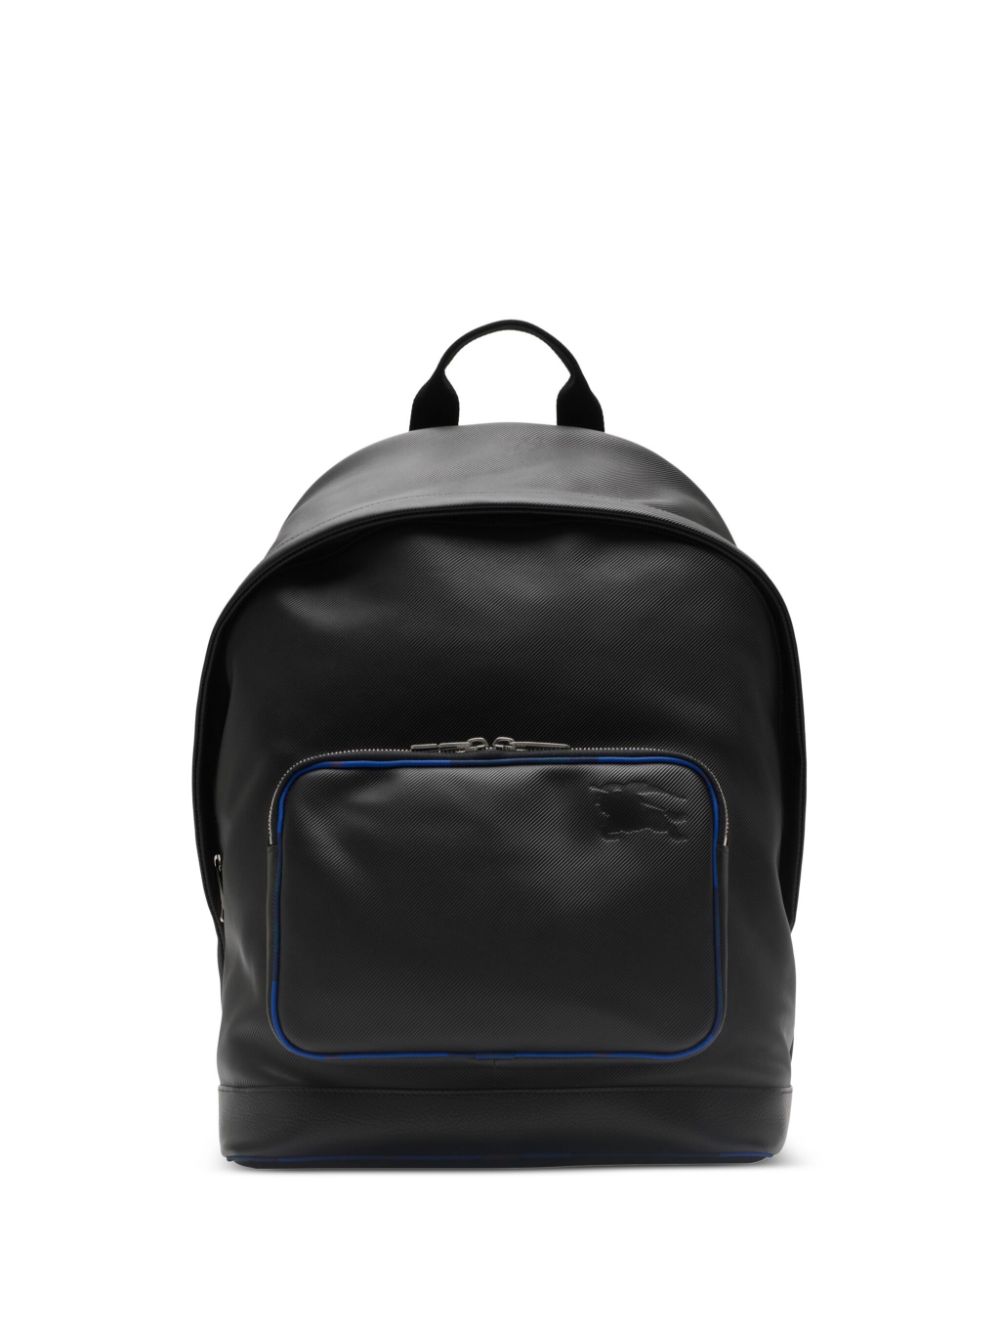 Burberry Ekd Leather Backpack In Black